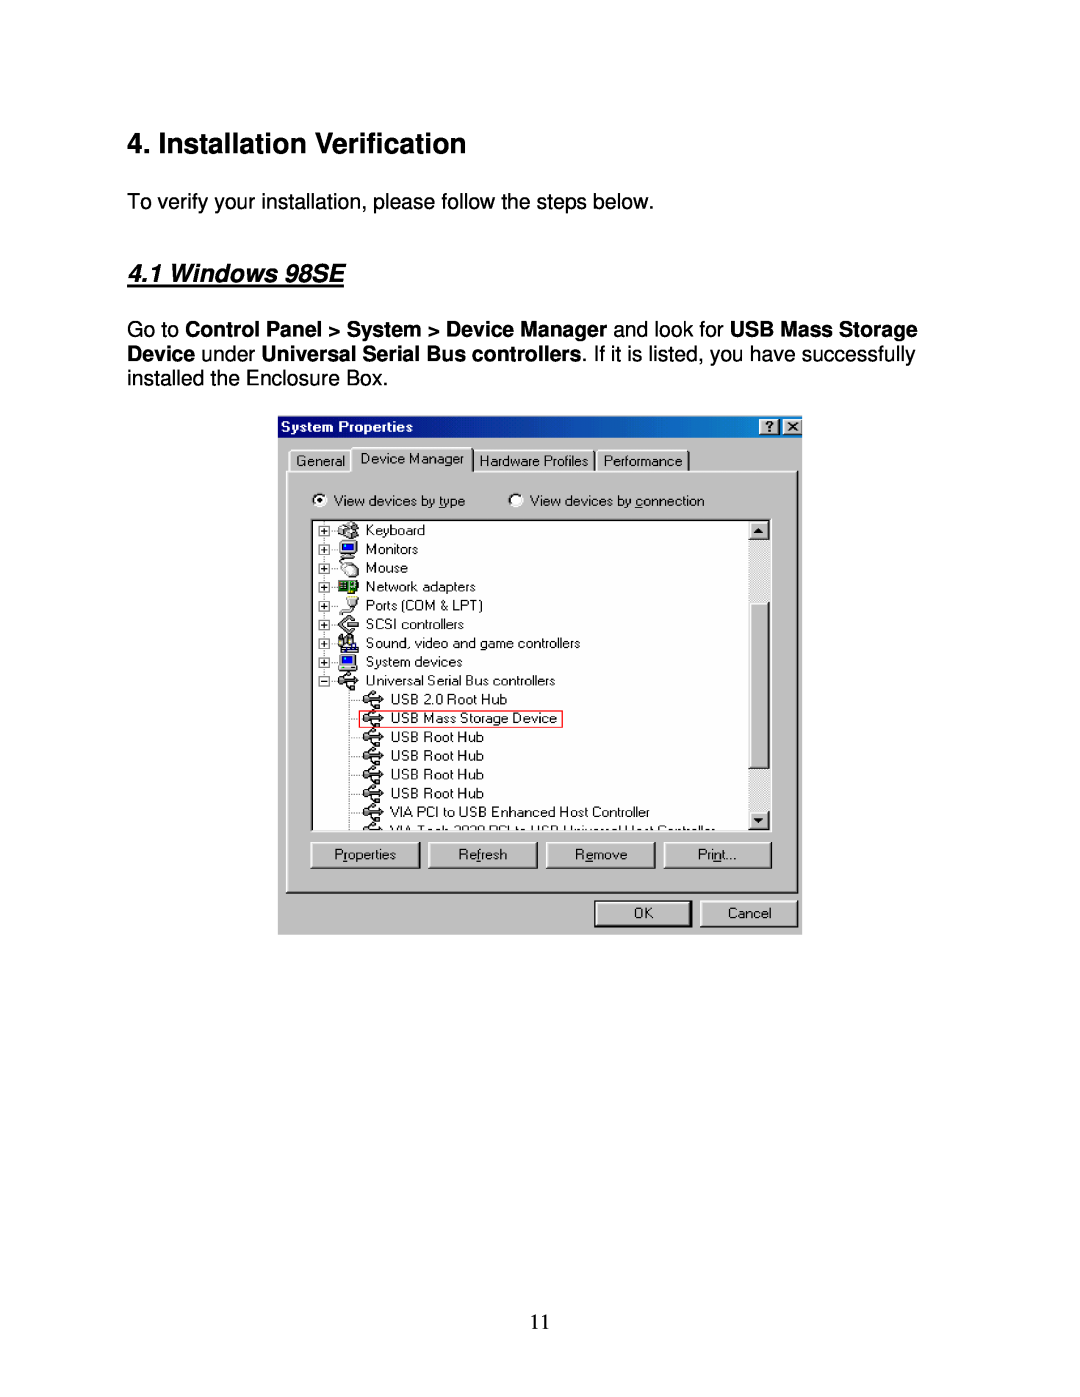 Airlink101 AEN-U25W user manual Installation Verification, Windows 98SE 